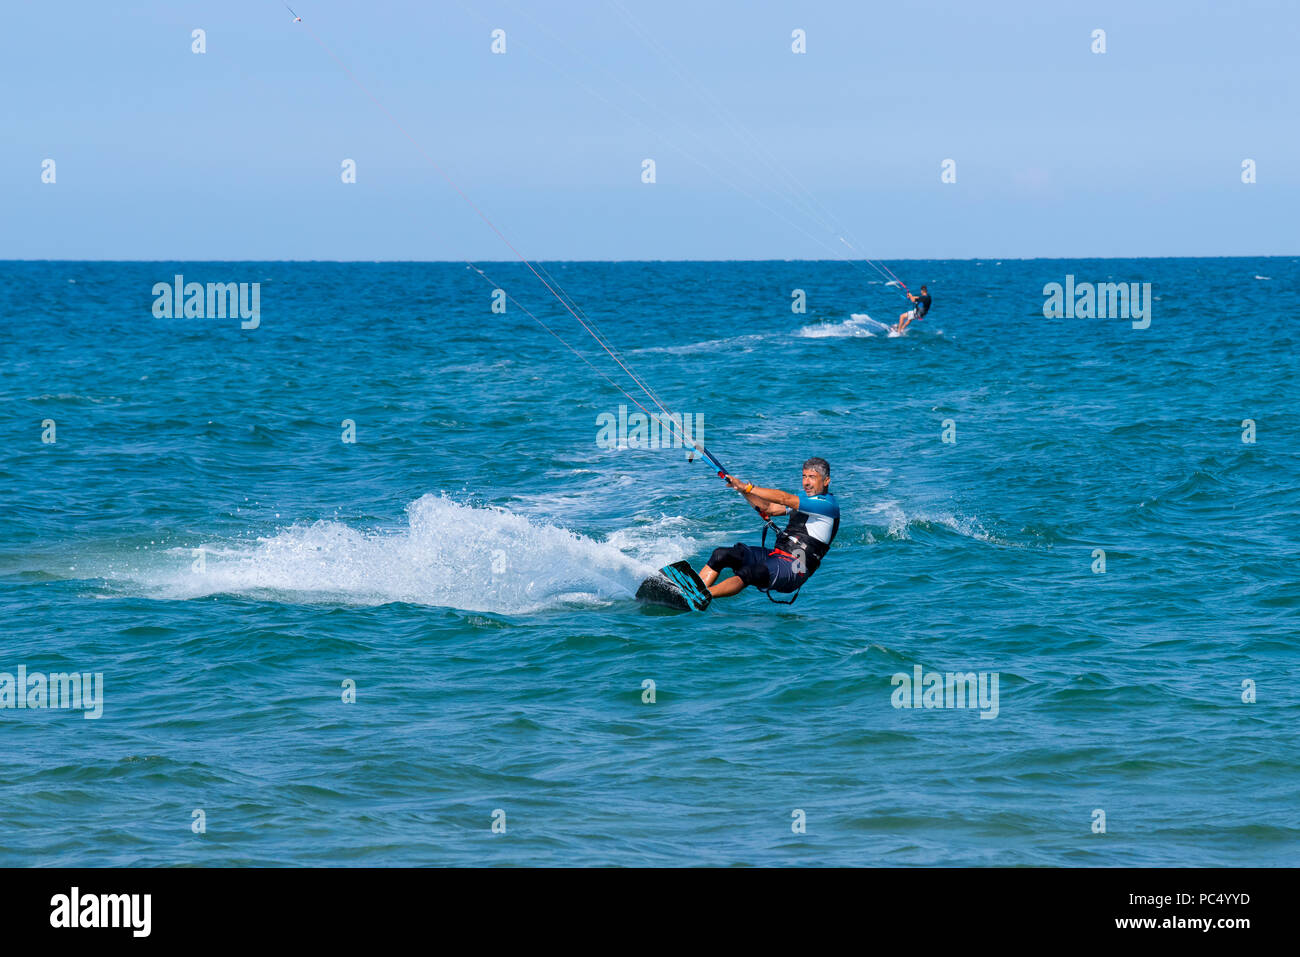 Shkorpilovtsi, Bulgarien - 29. Juni 2018: Kiteboarder Athlet Durchführung kiteboarding Tricks auf dem Wasser im Meer. Kiteboarding, Kitesurfing Sport. Stockfoto